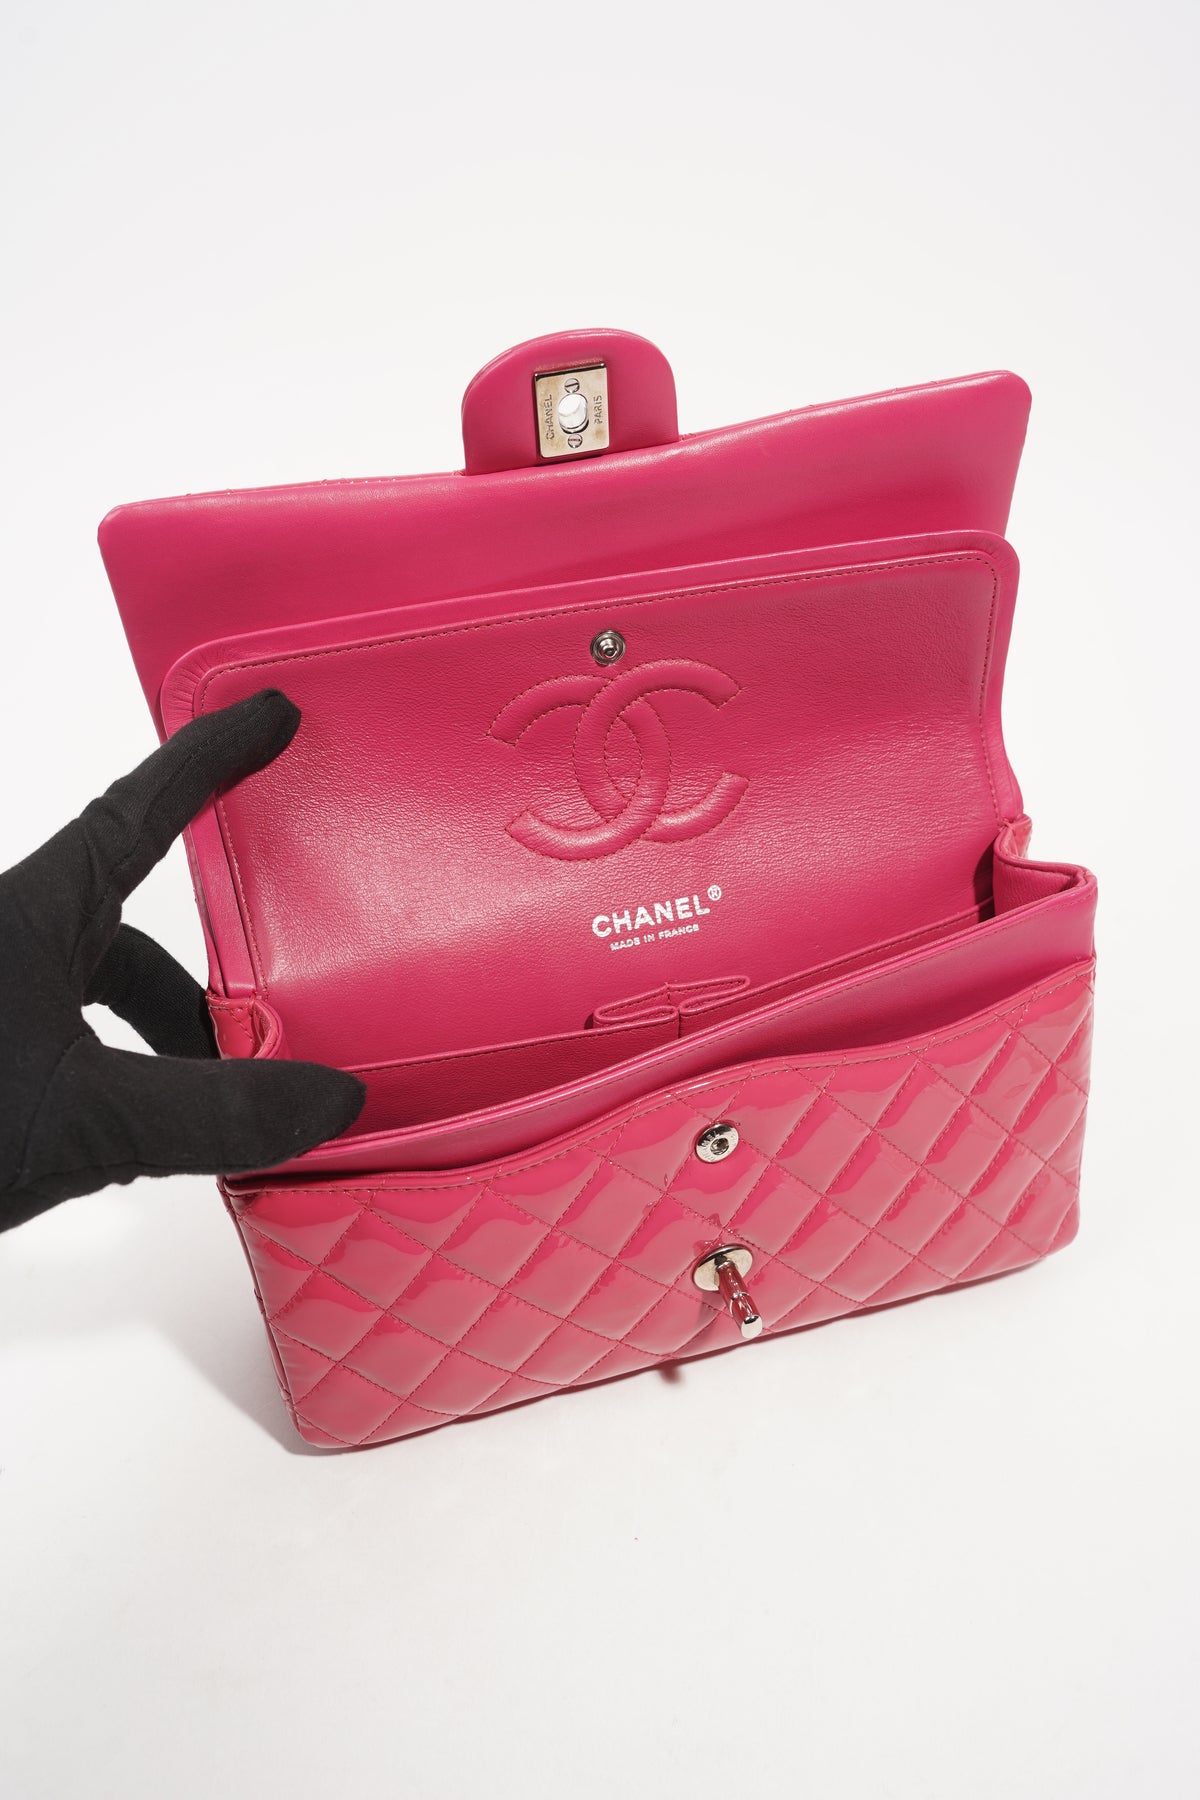 Chanel Timeless Medium Patent Hot Pink / Fuchsia